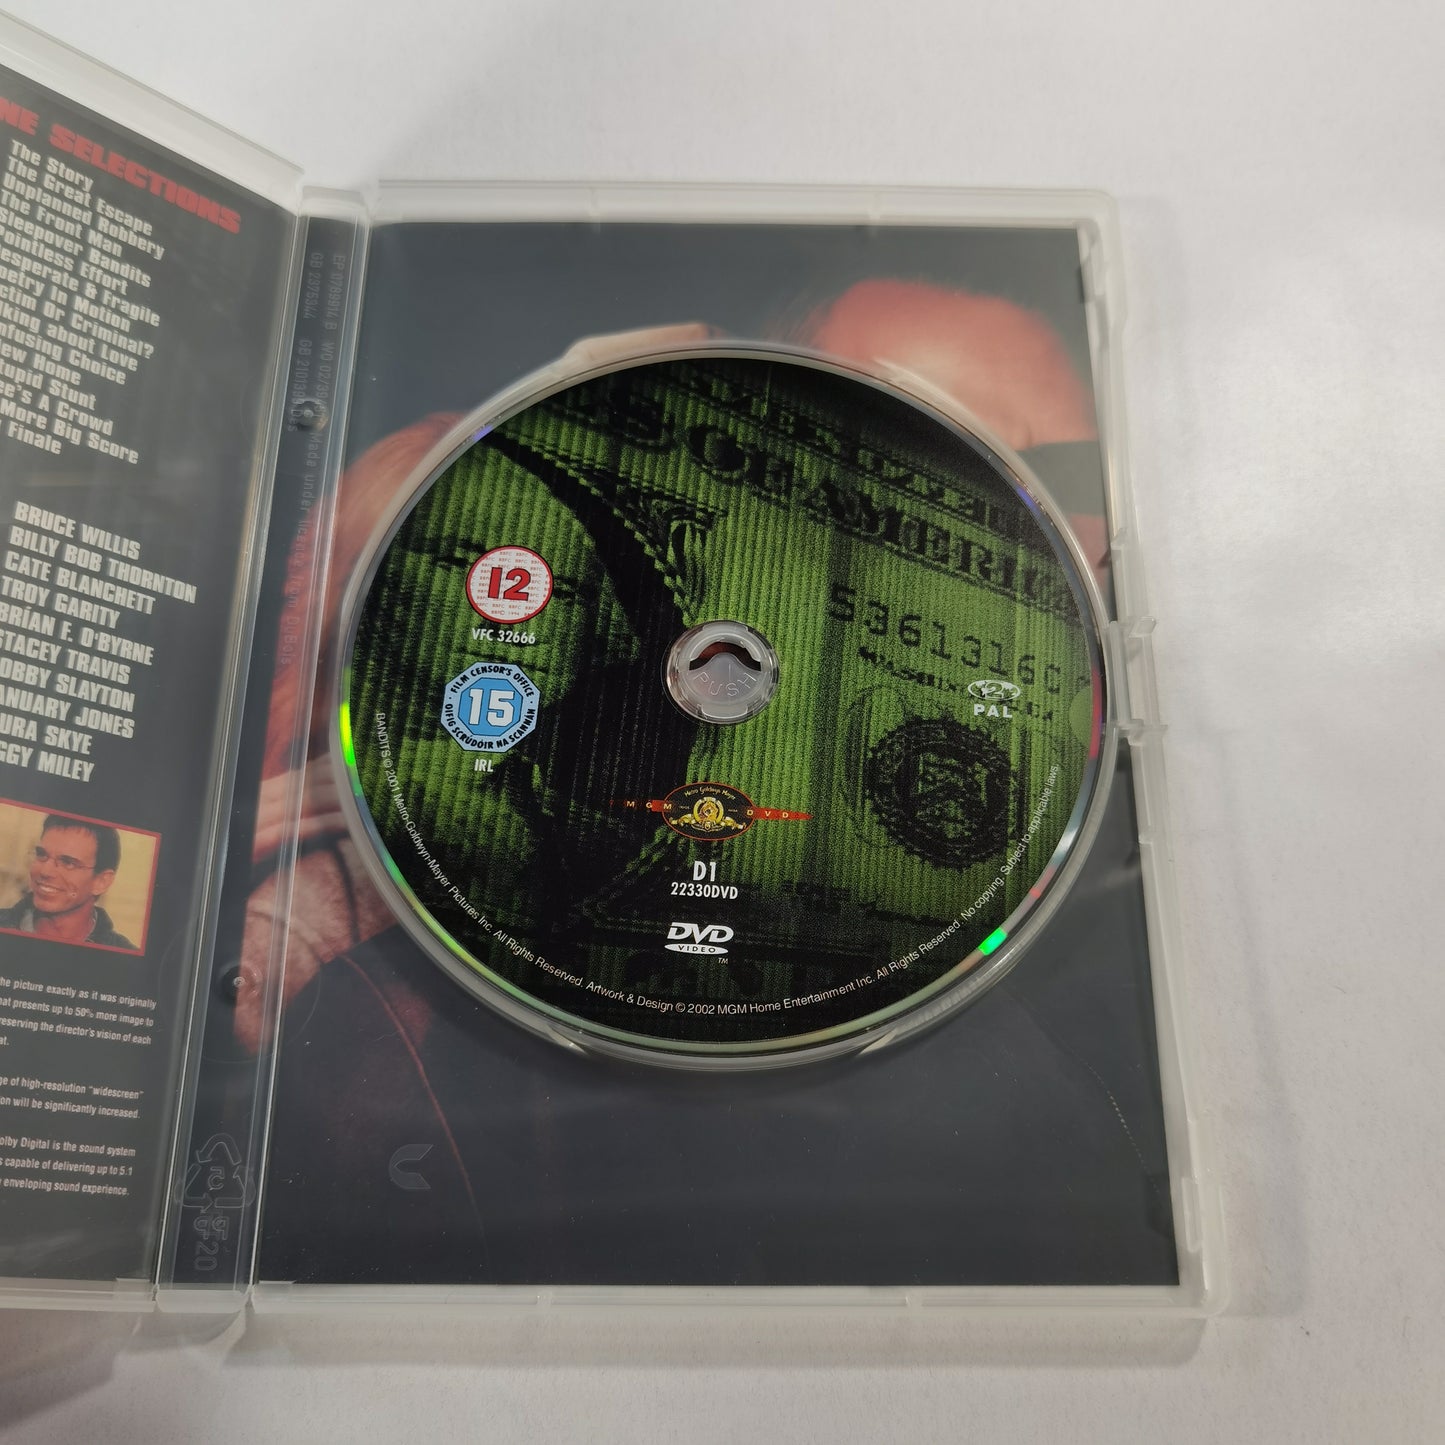 Bandits (2001) - DVD UK 2004